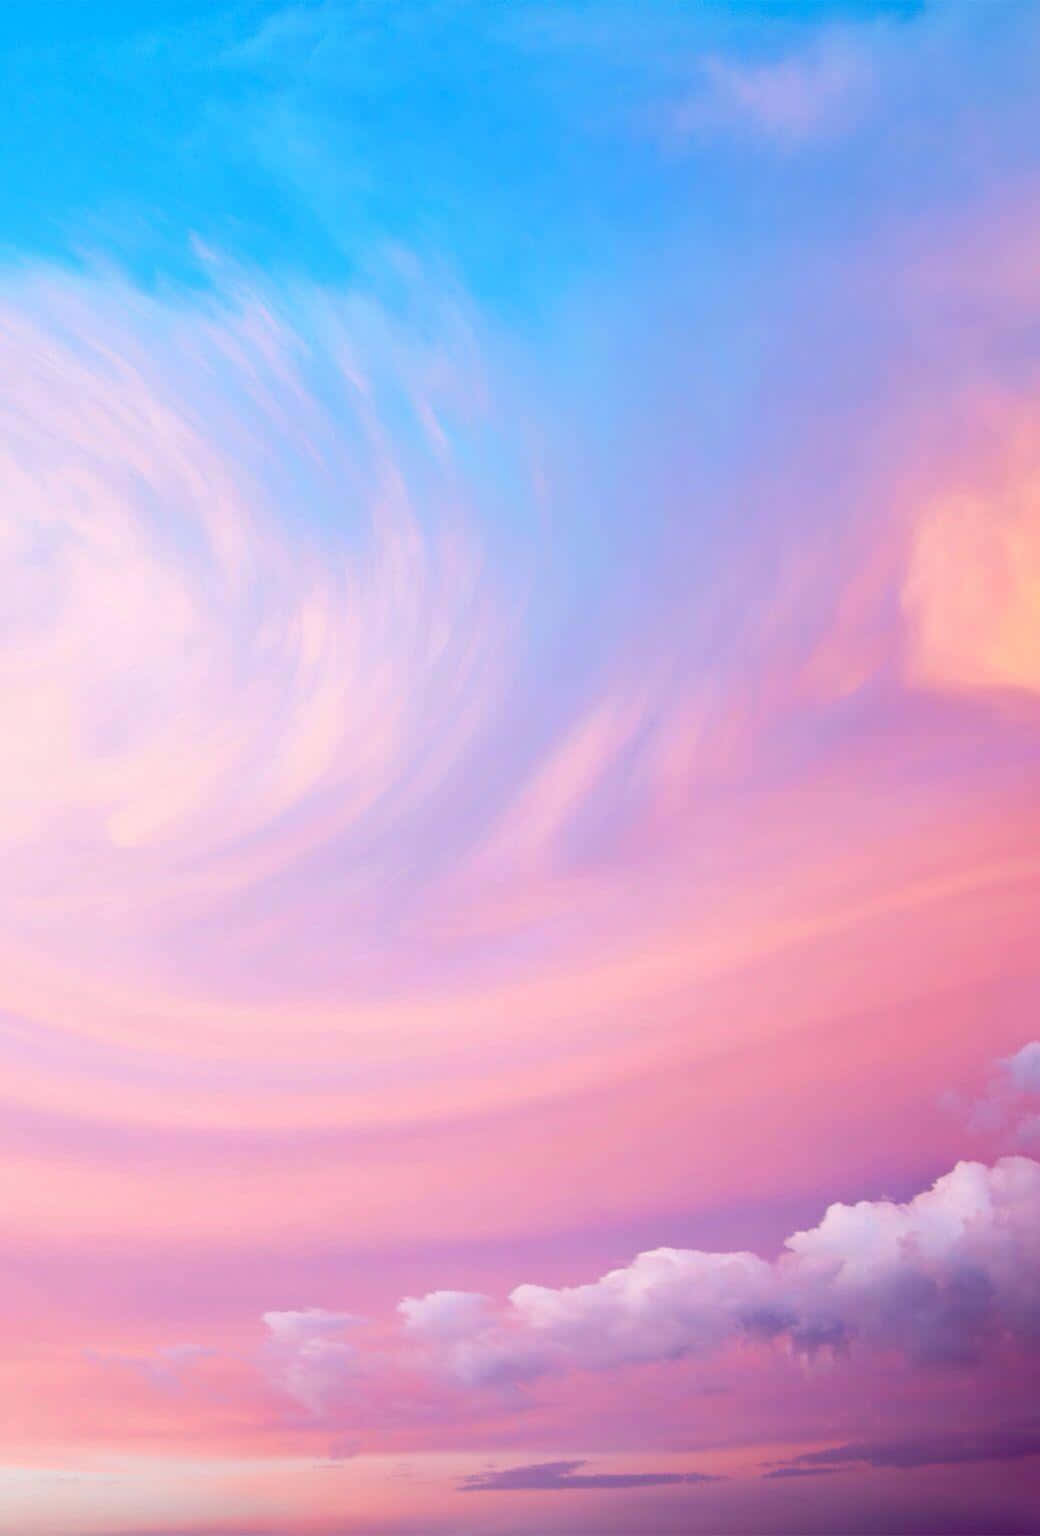 Download Beautiful Pink Sky at Sunset Wallpaper | Wallpapers.com